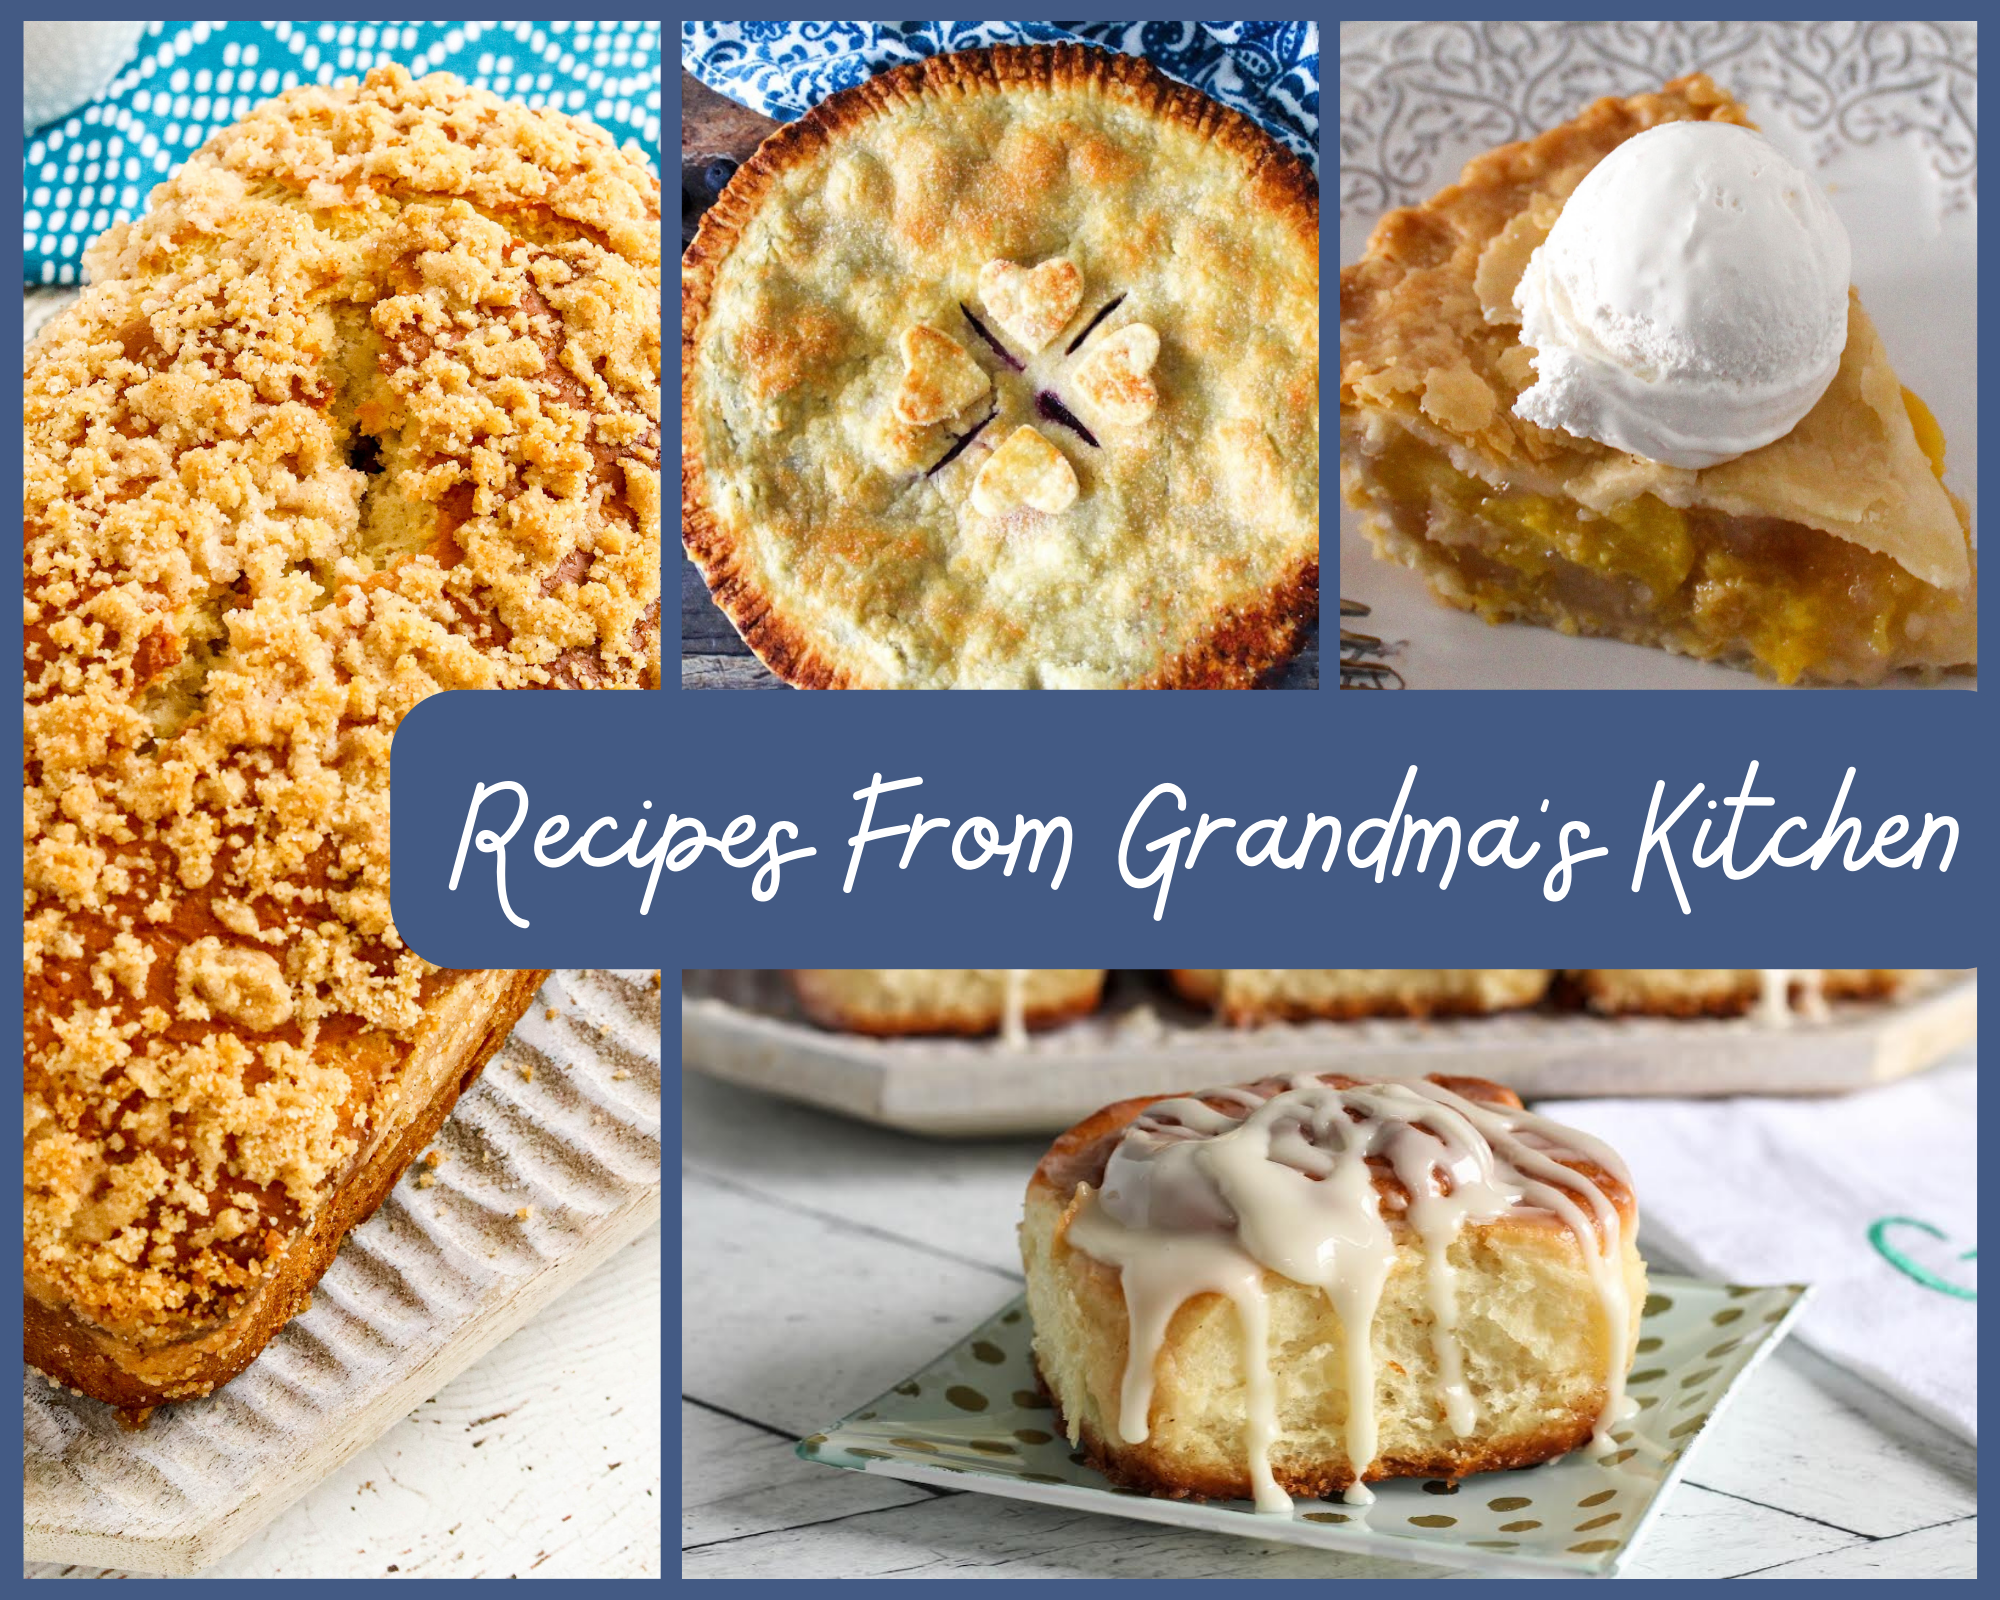 Recipes From Grandma’s Kitchen